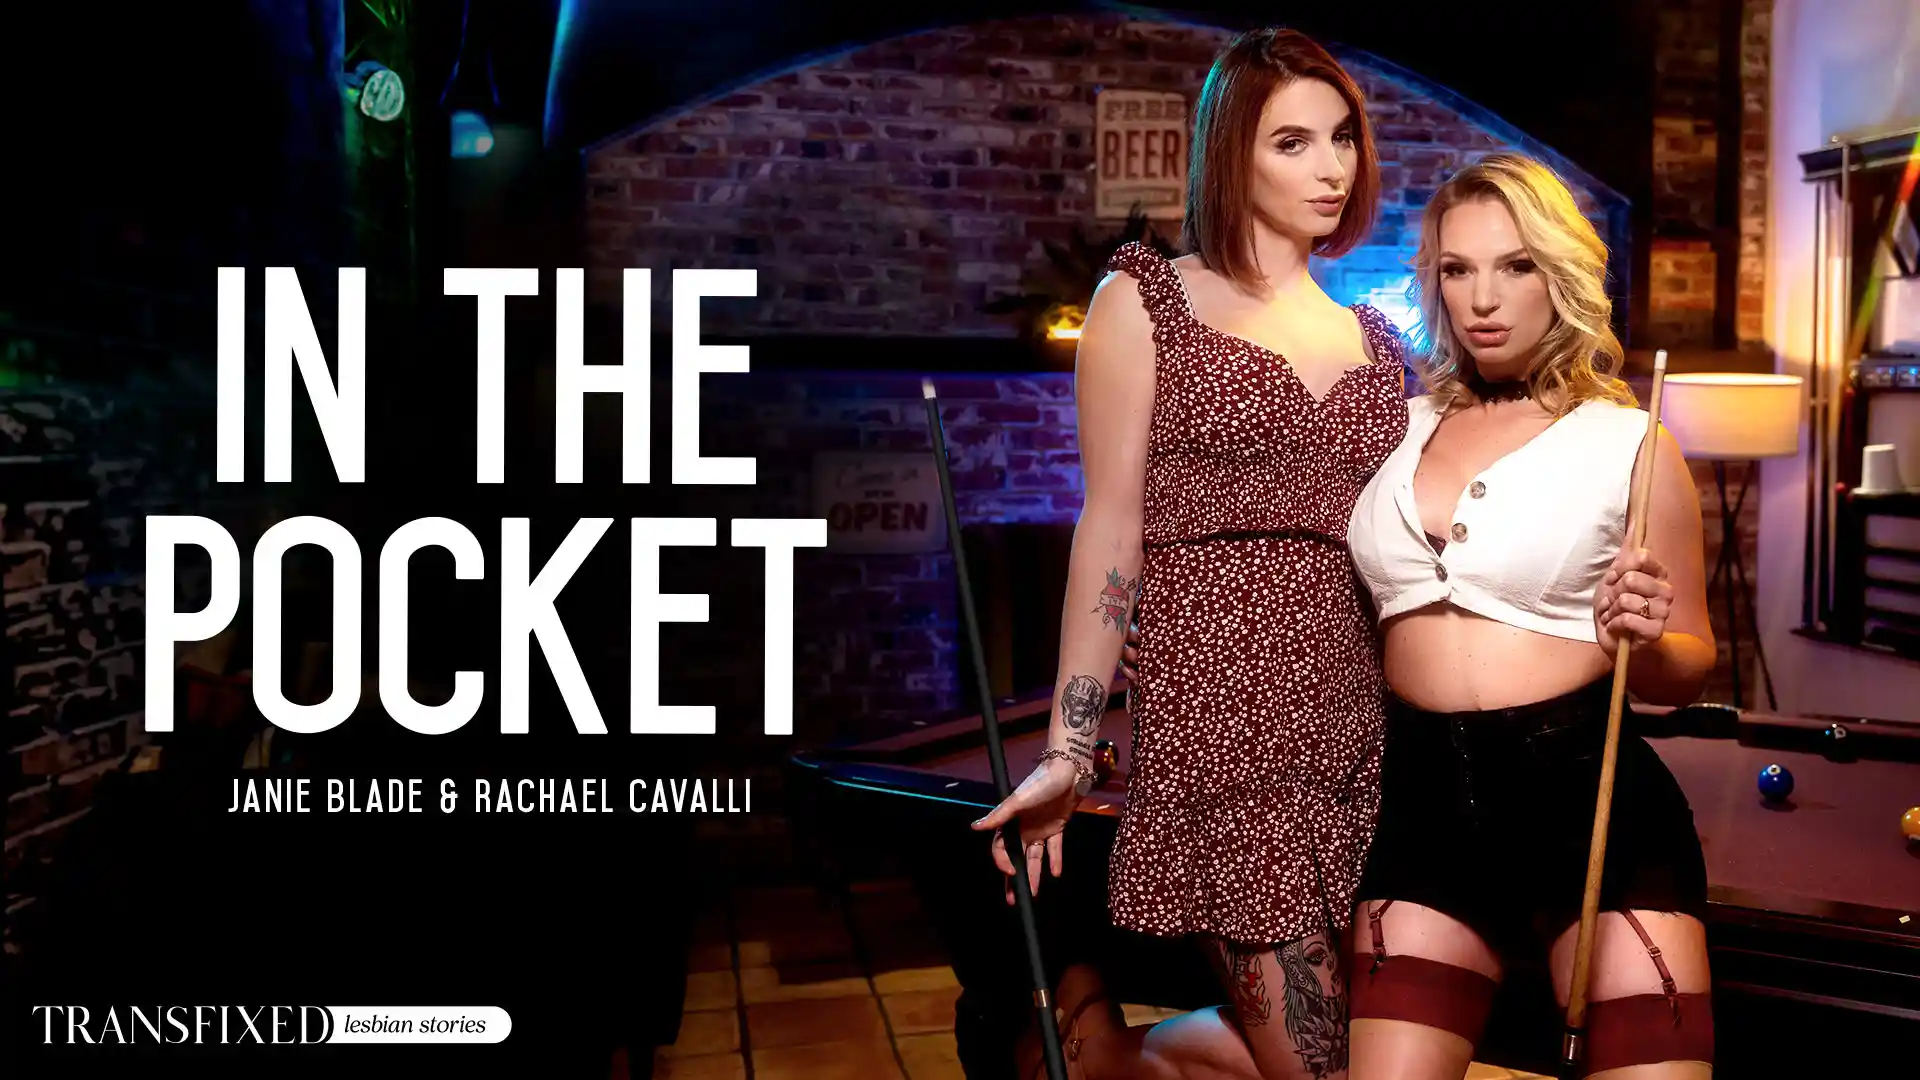 Transfixed Rachael Cavalli & Janie Blade In The Pocket